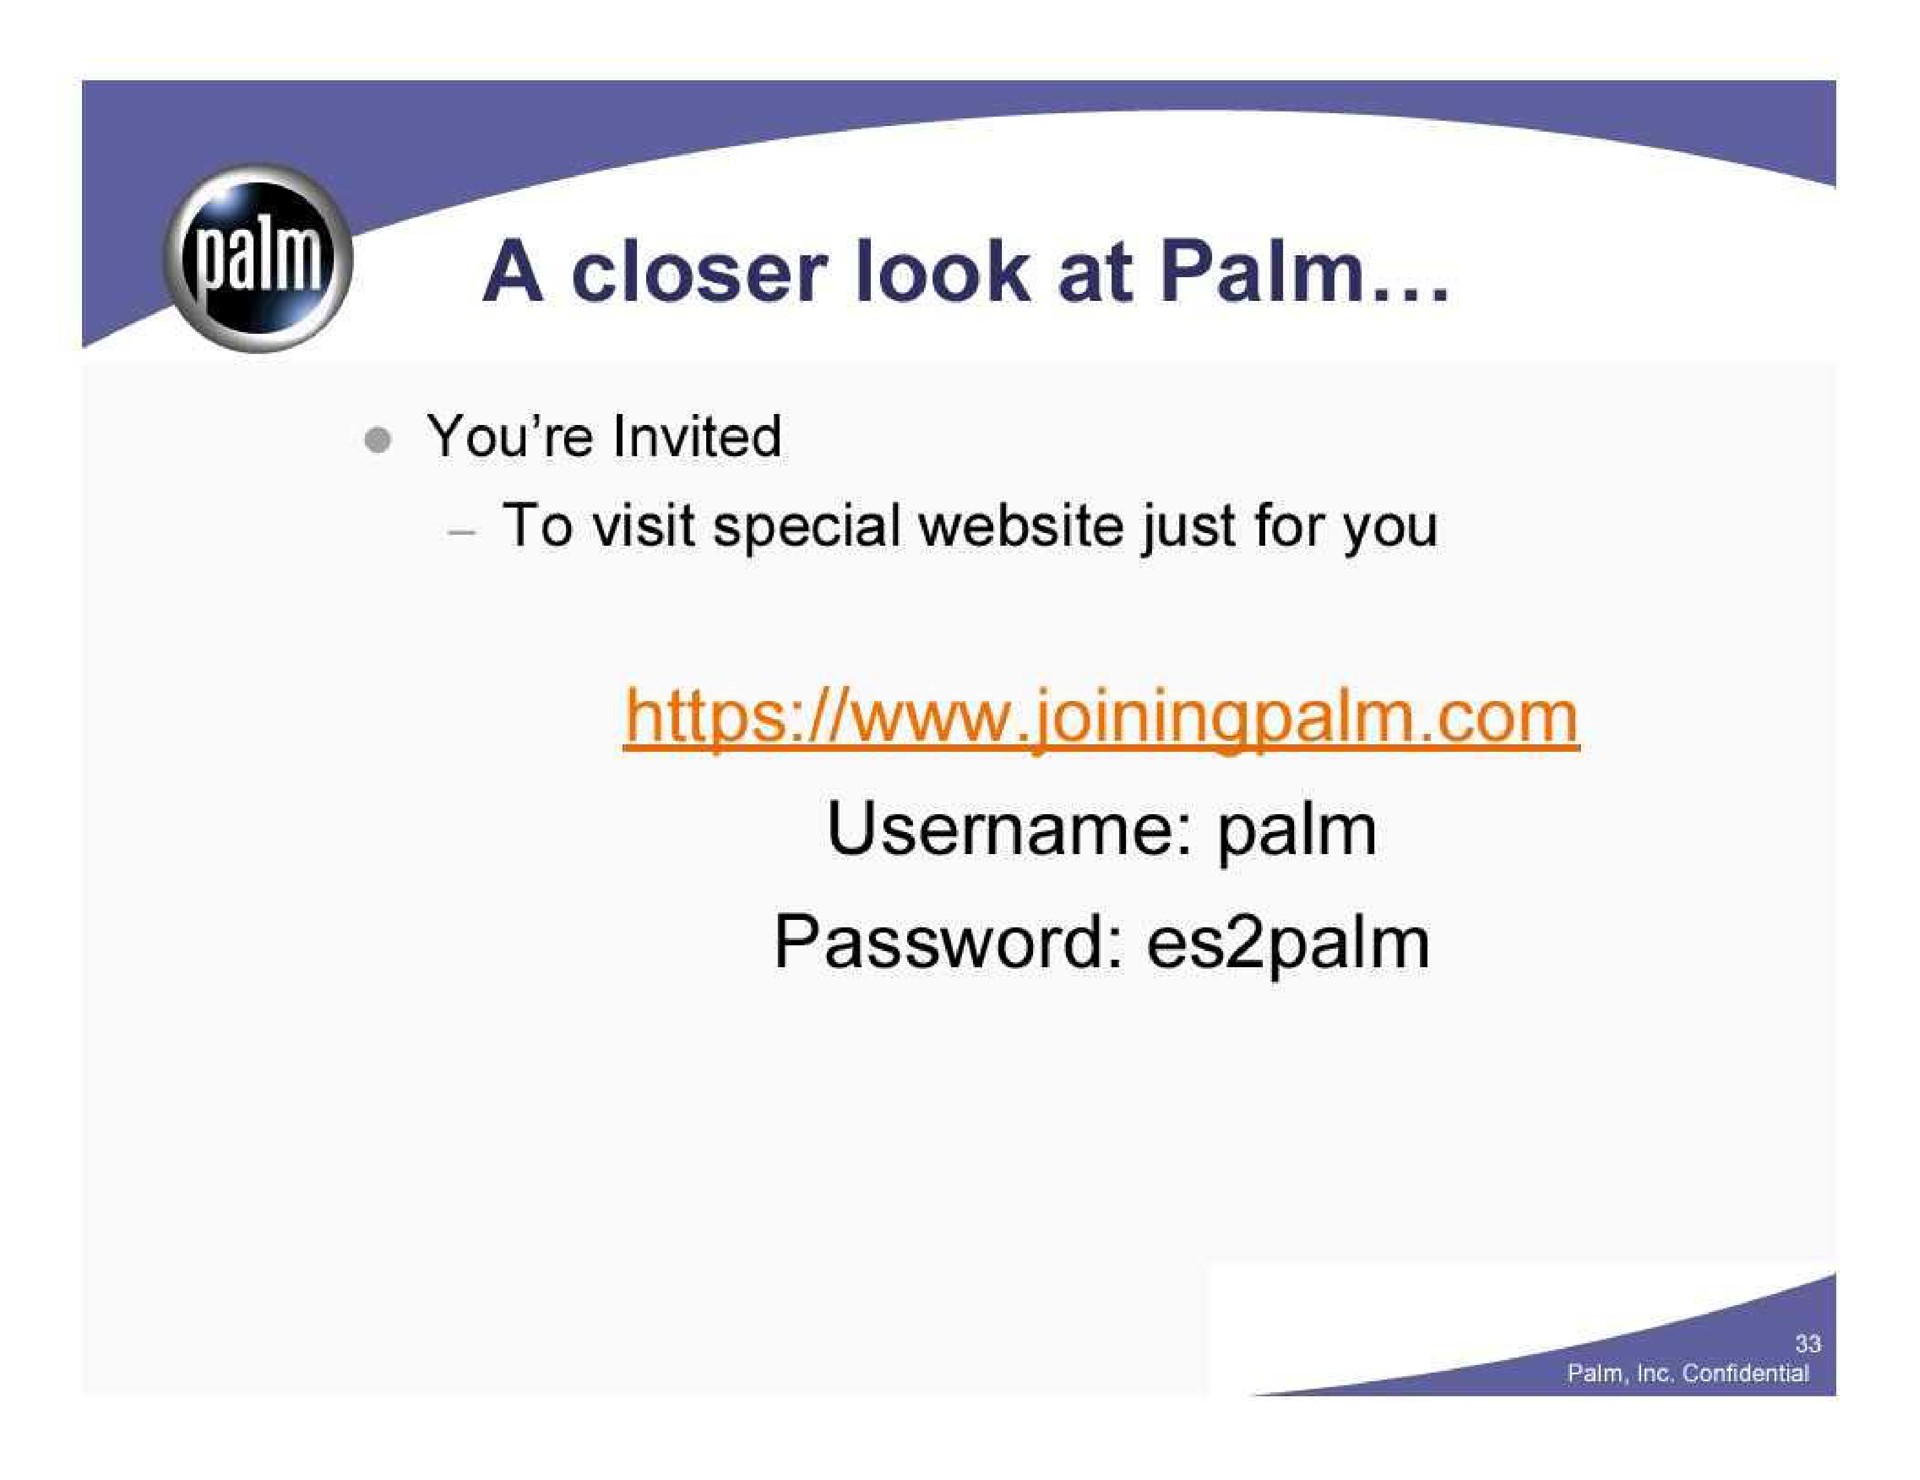 a closer look at palm palm | Palm Inc.